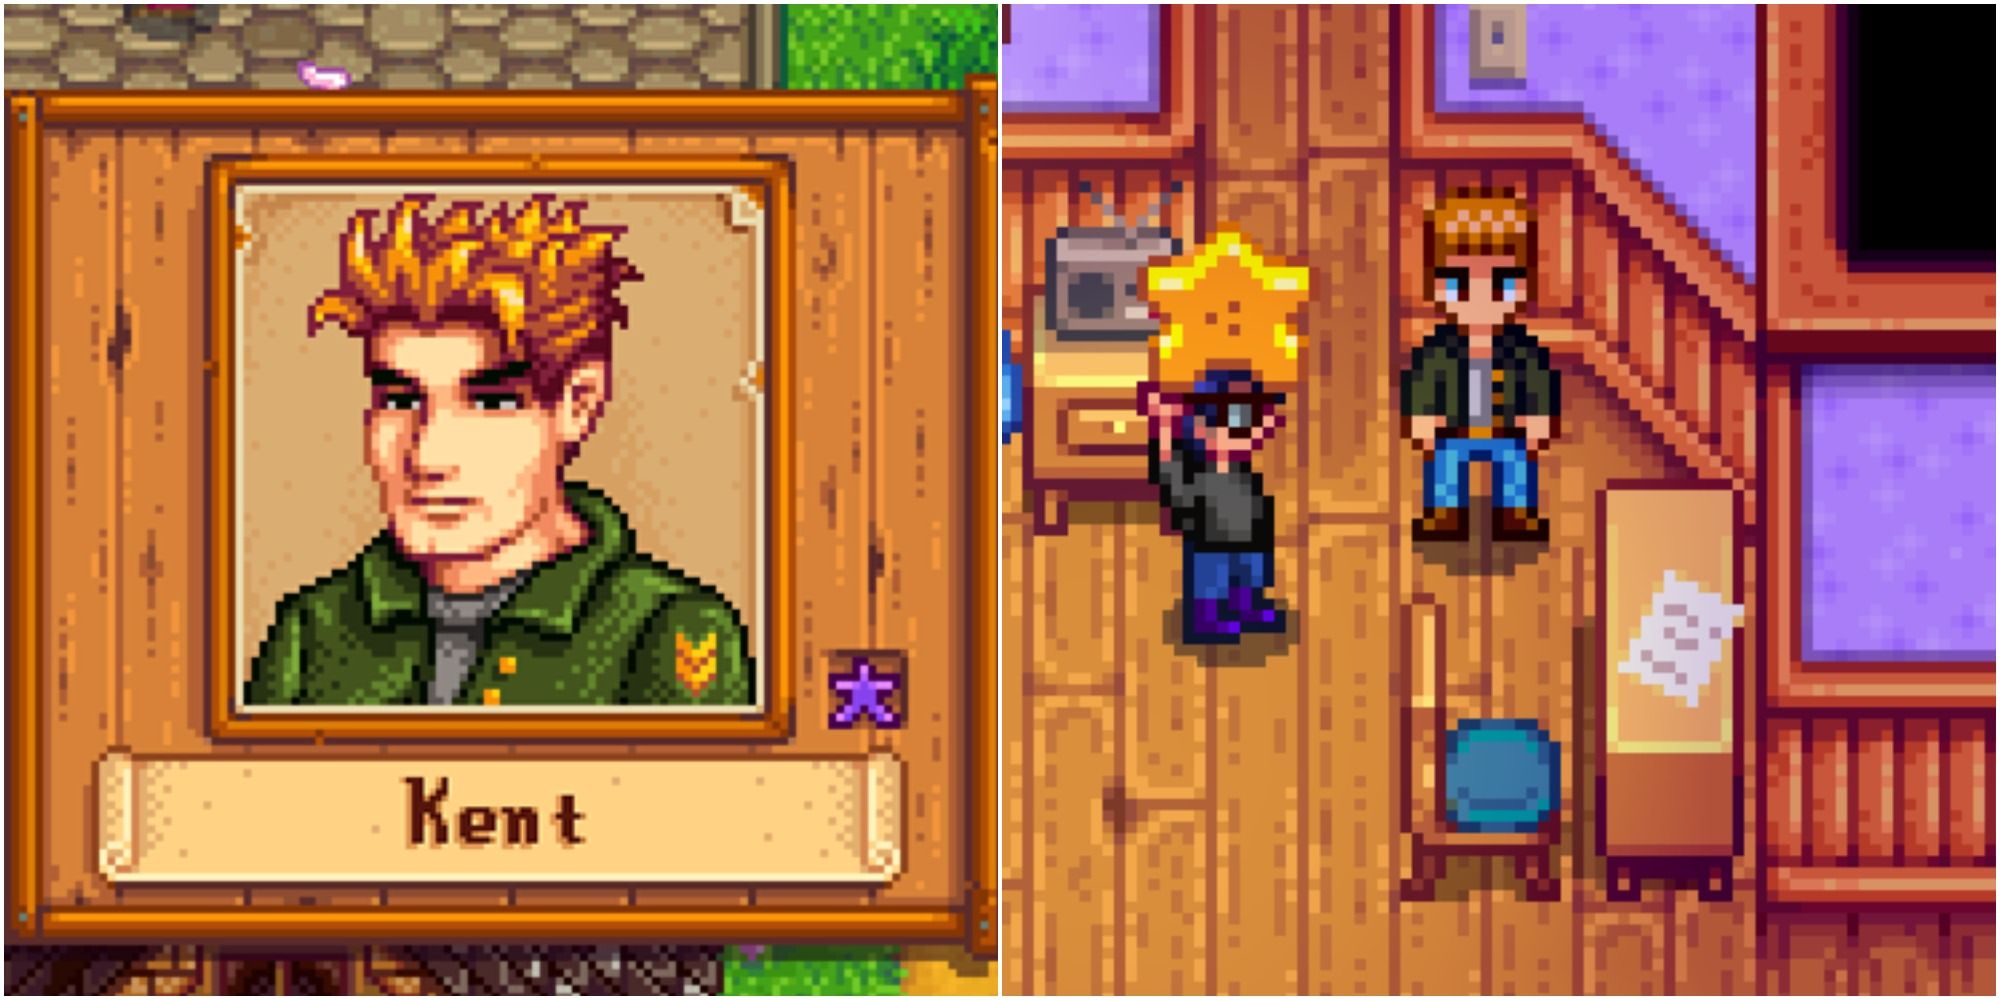 Left: Kent's portrait; right: player giving Kent a starfruit